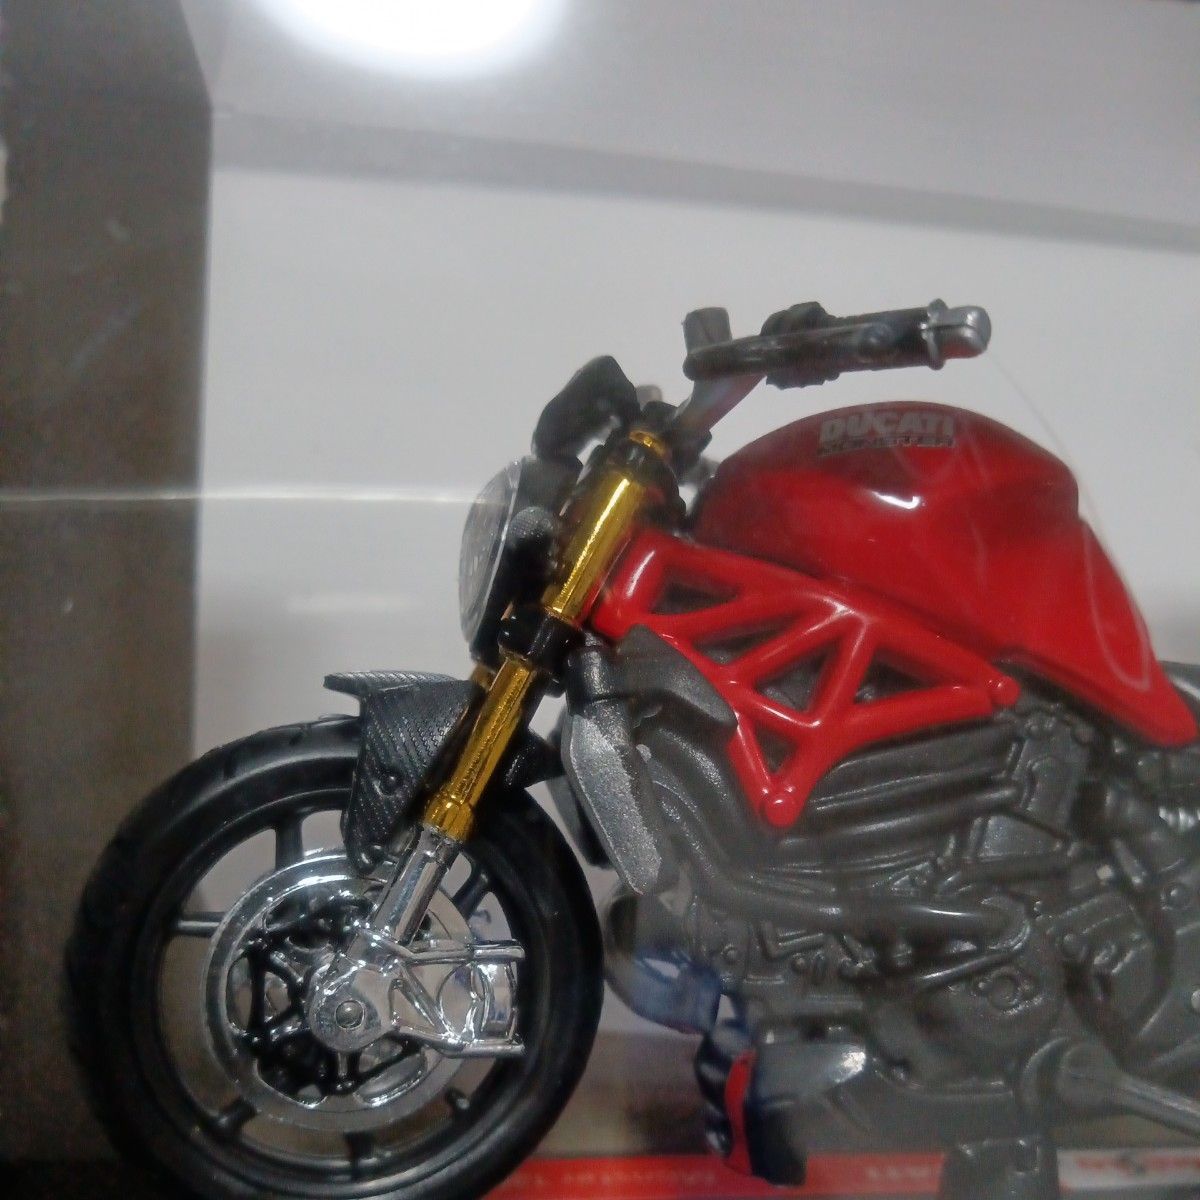 Maisto「1/18 DUCATI Monster 1200 S」ドゥカティ モンスター バイク オートバイ ミニカー マイスト - メルカリ